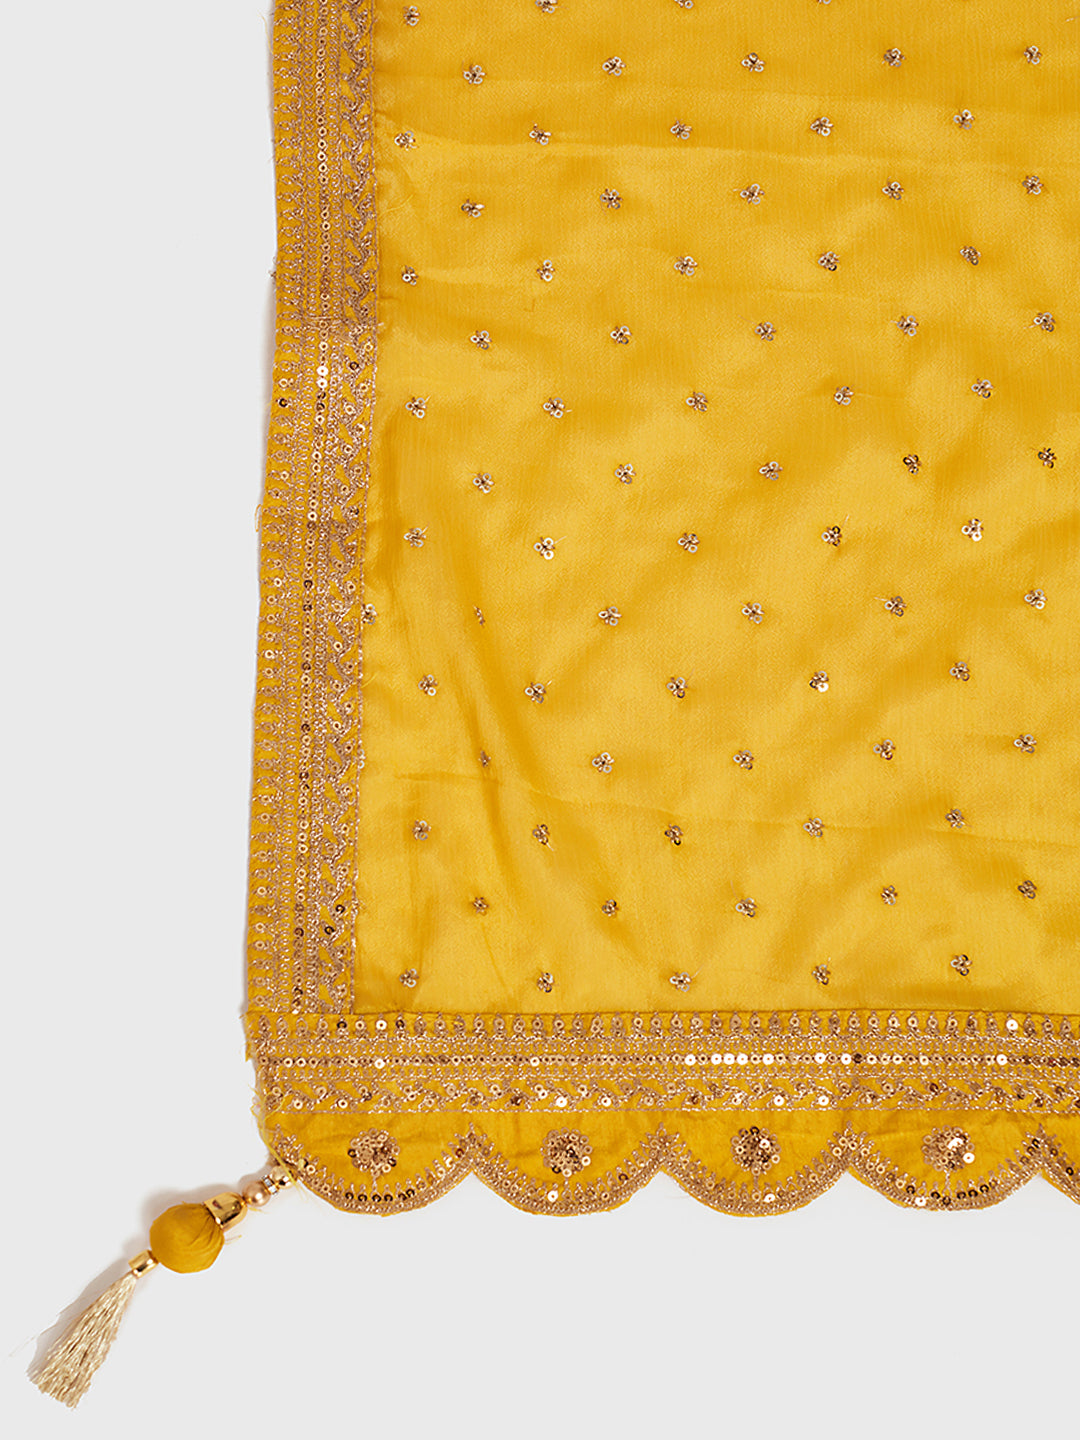 Neeru's Yellow Color Georgette Fabric Ghagra Set